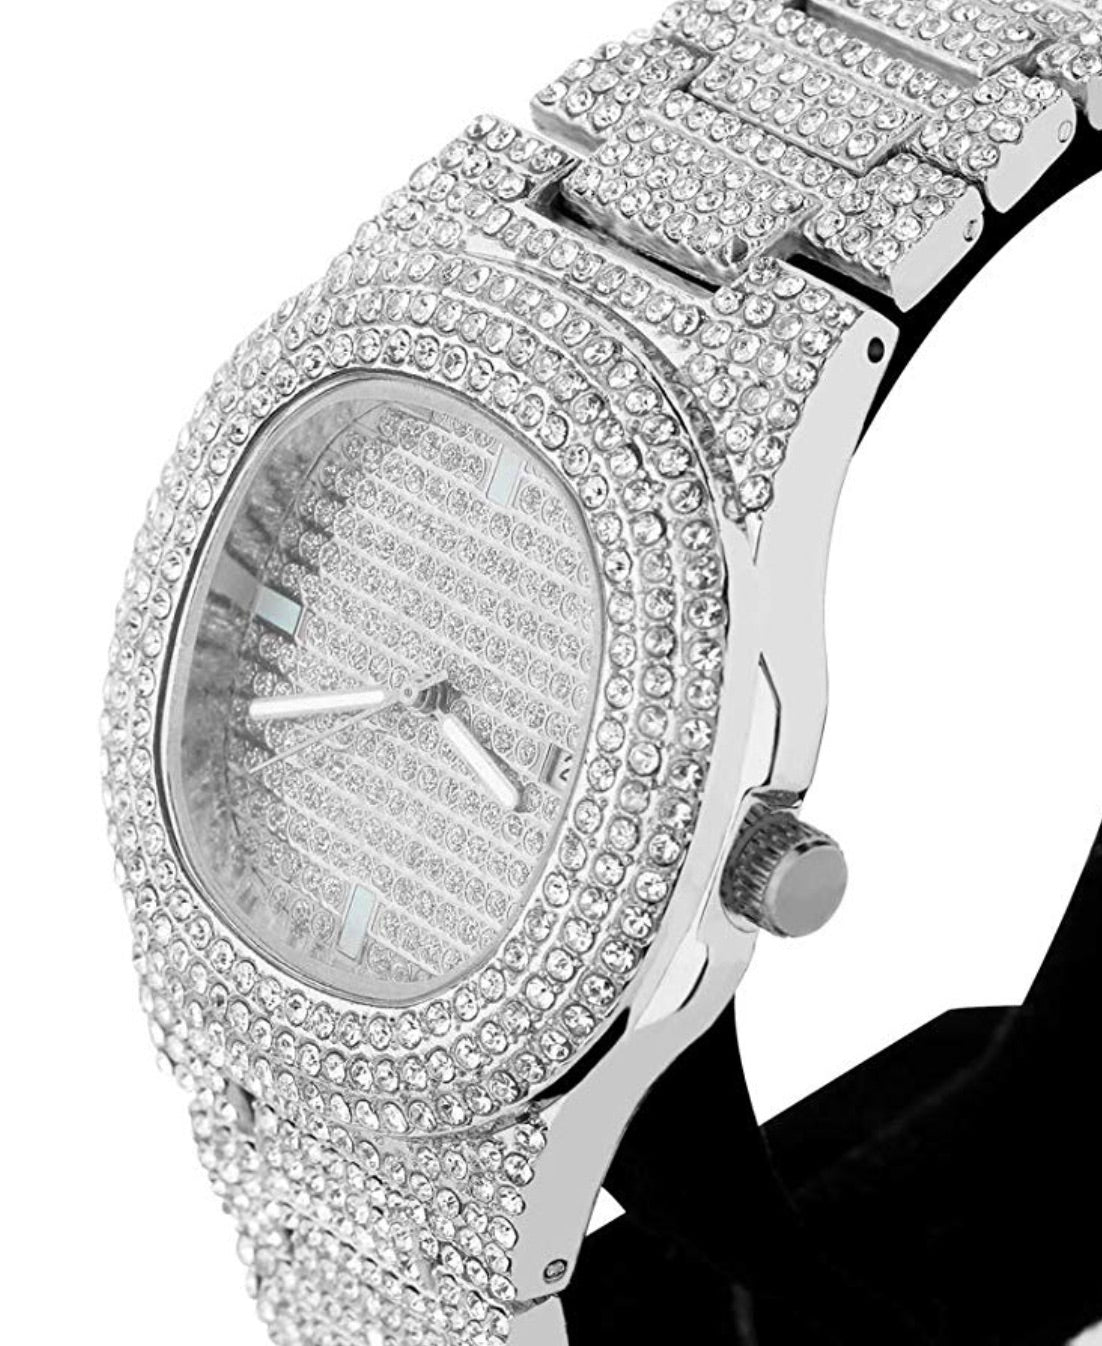 18k Gold Cz Quartz Cushion-Shape Wrist Watch